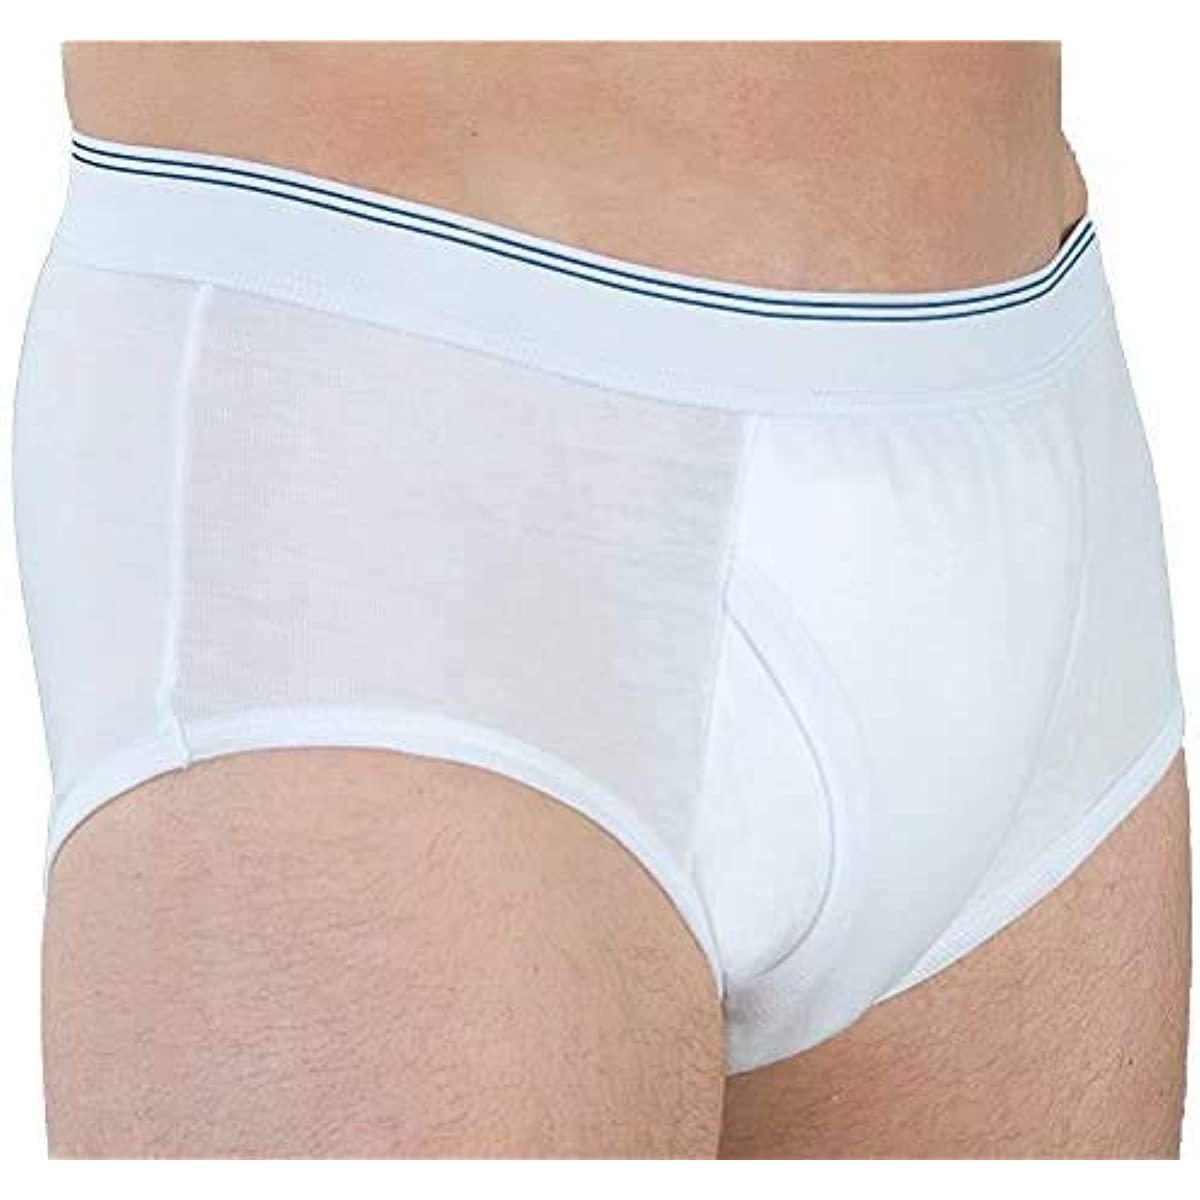  Incontinence Underwear for Men 2PCS Washable Mens